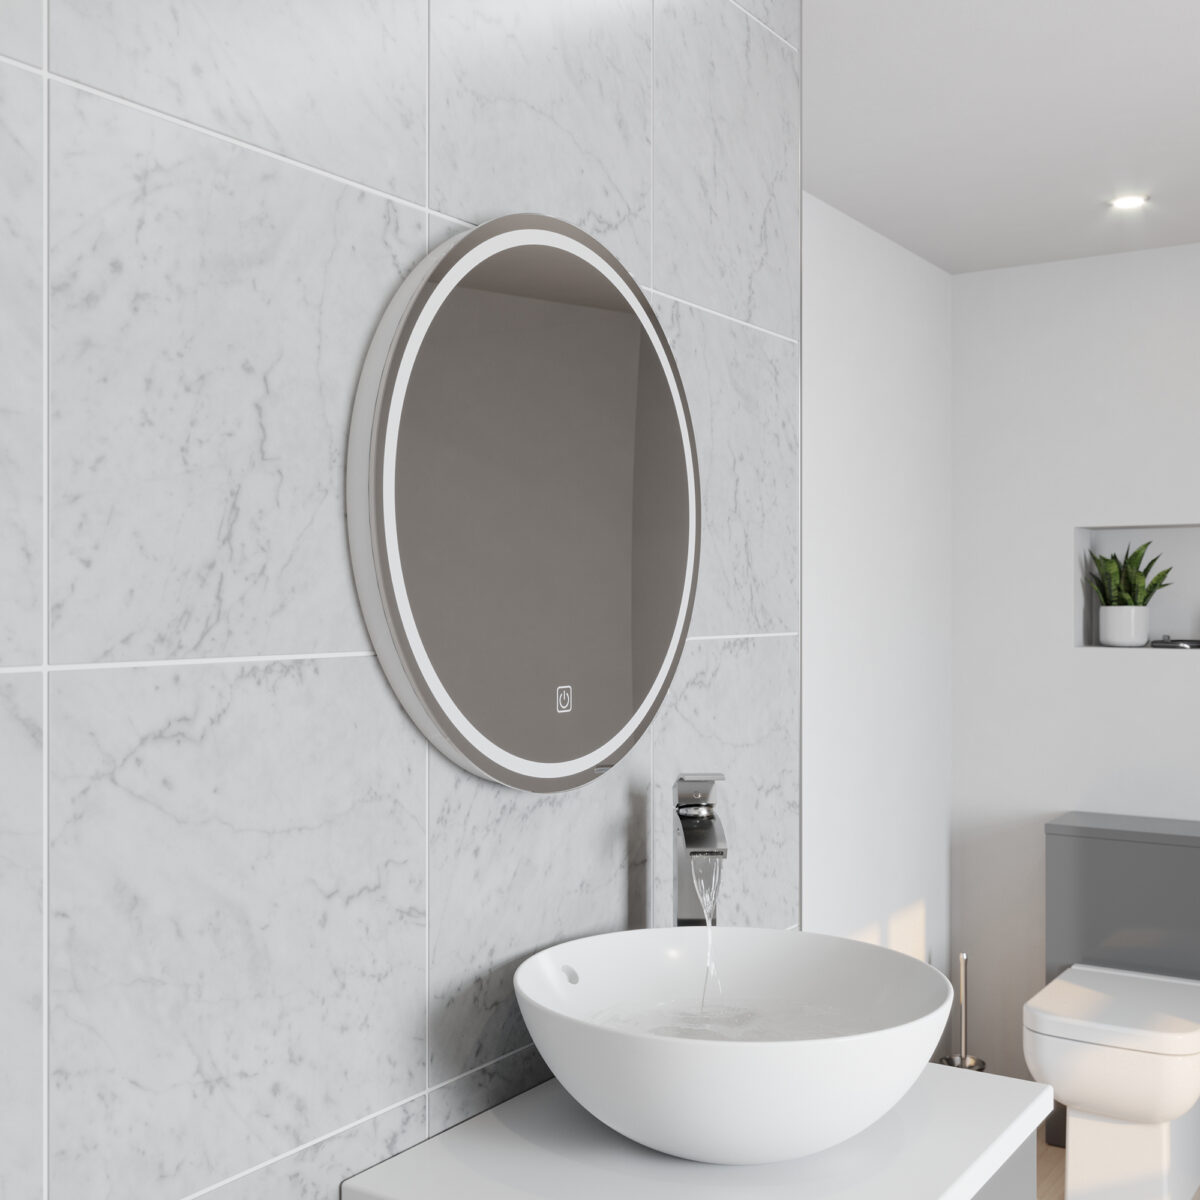 K-Vit Vista 600mm Circular  LED Illuminated Mirror for bathroom - Premier Tiles and Bathrooms